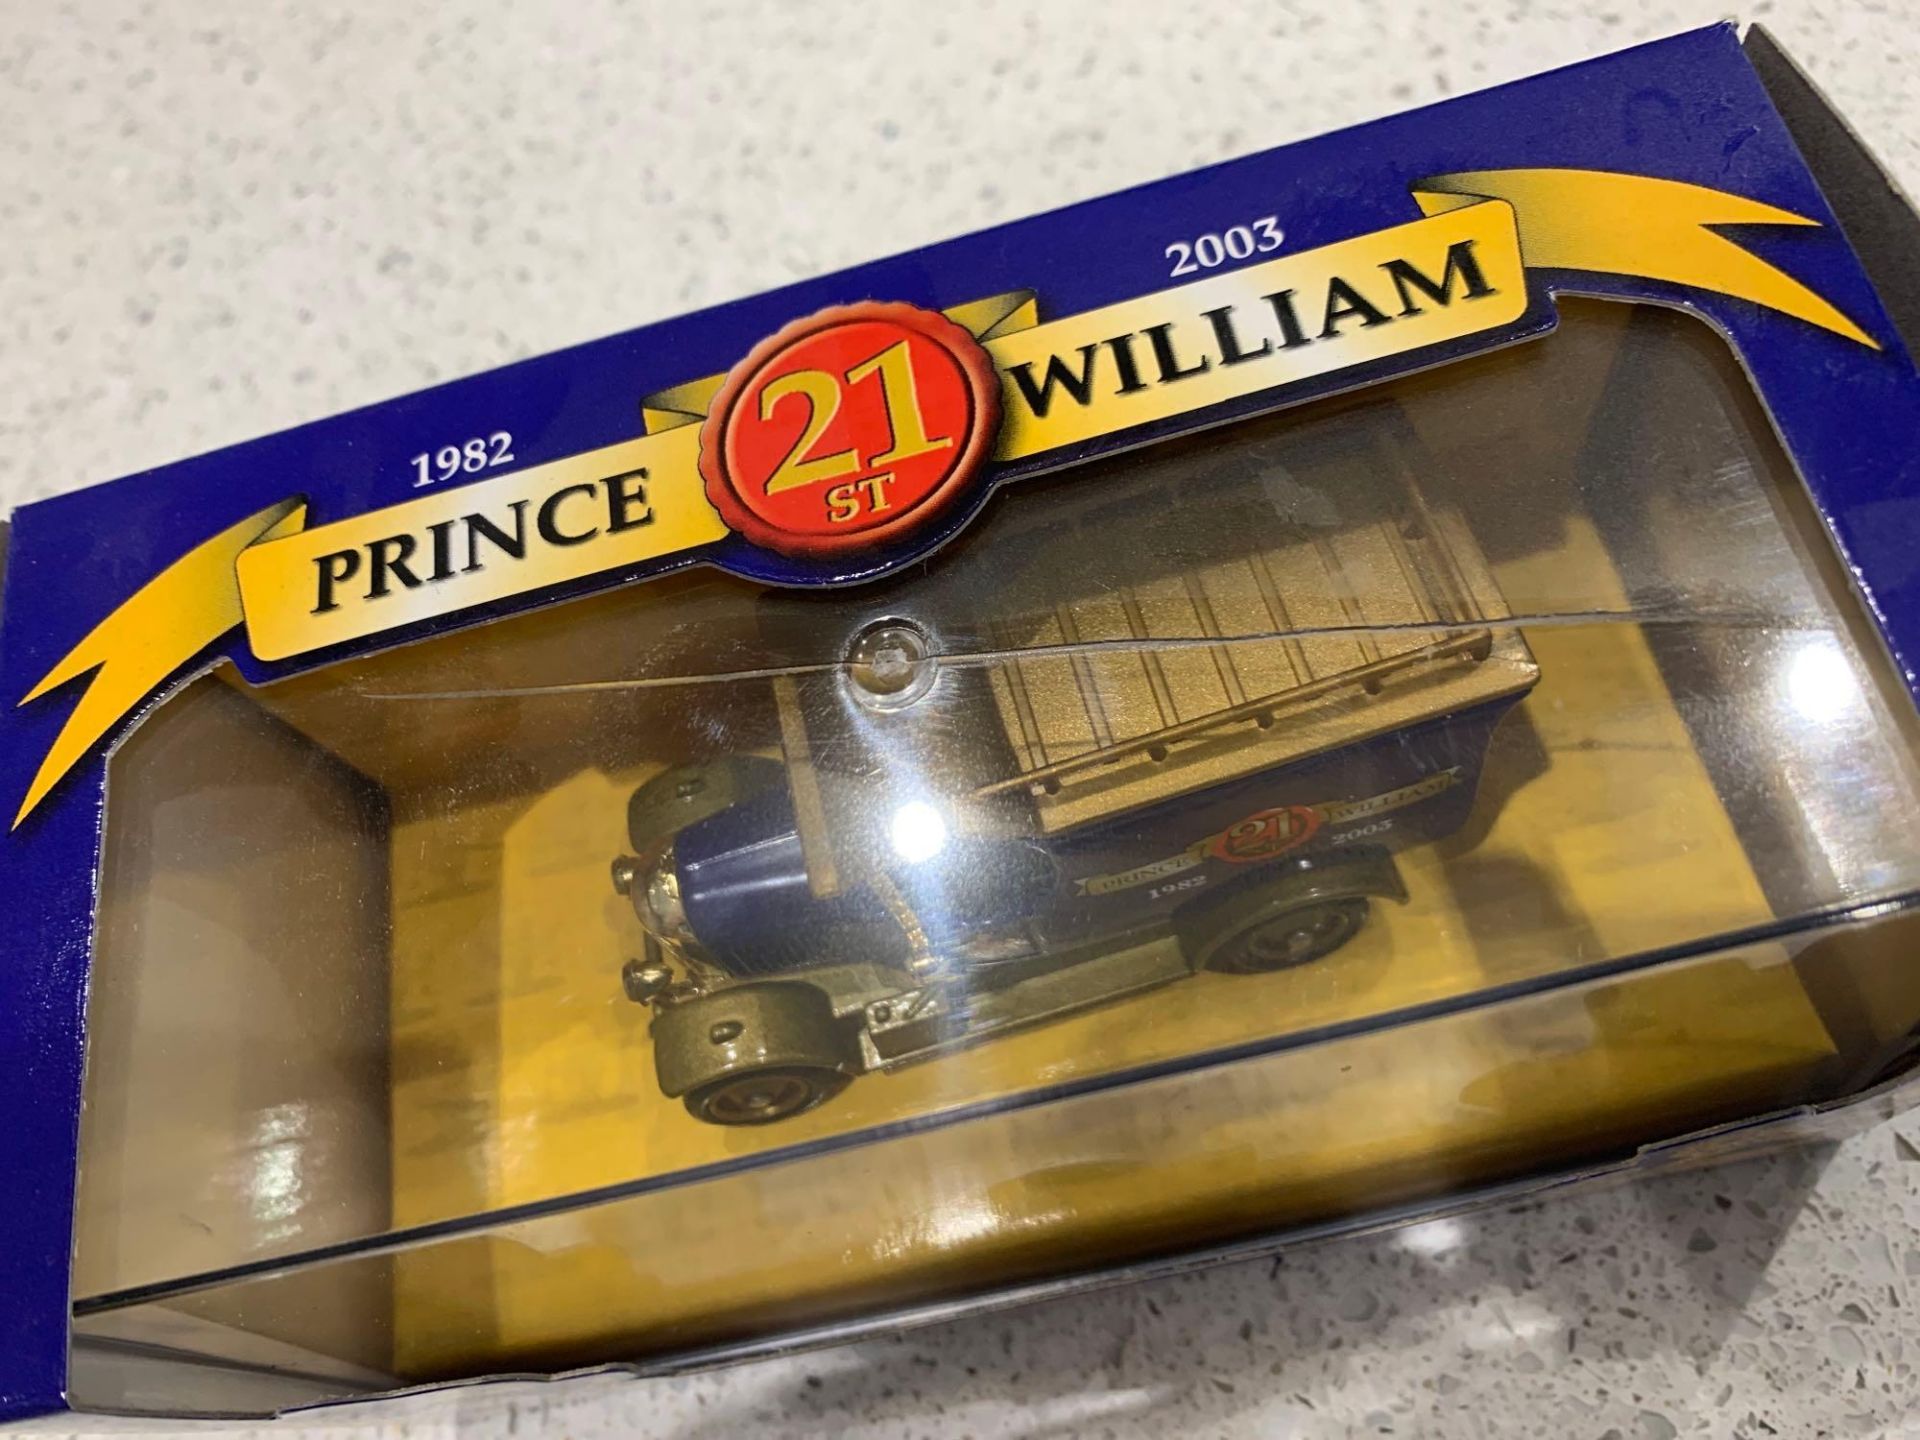 Lledo Diecast Scale Model Promotional Diecast Prince William 21st Birthday DG050053 Bull Nosed Van - Image 3 of 8